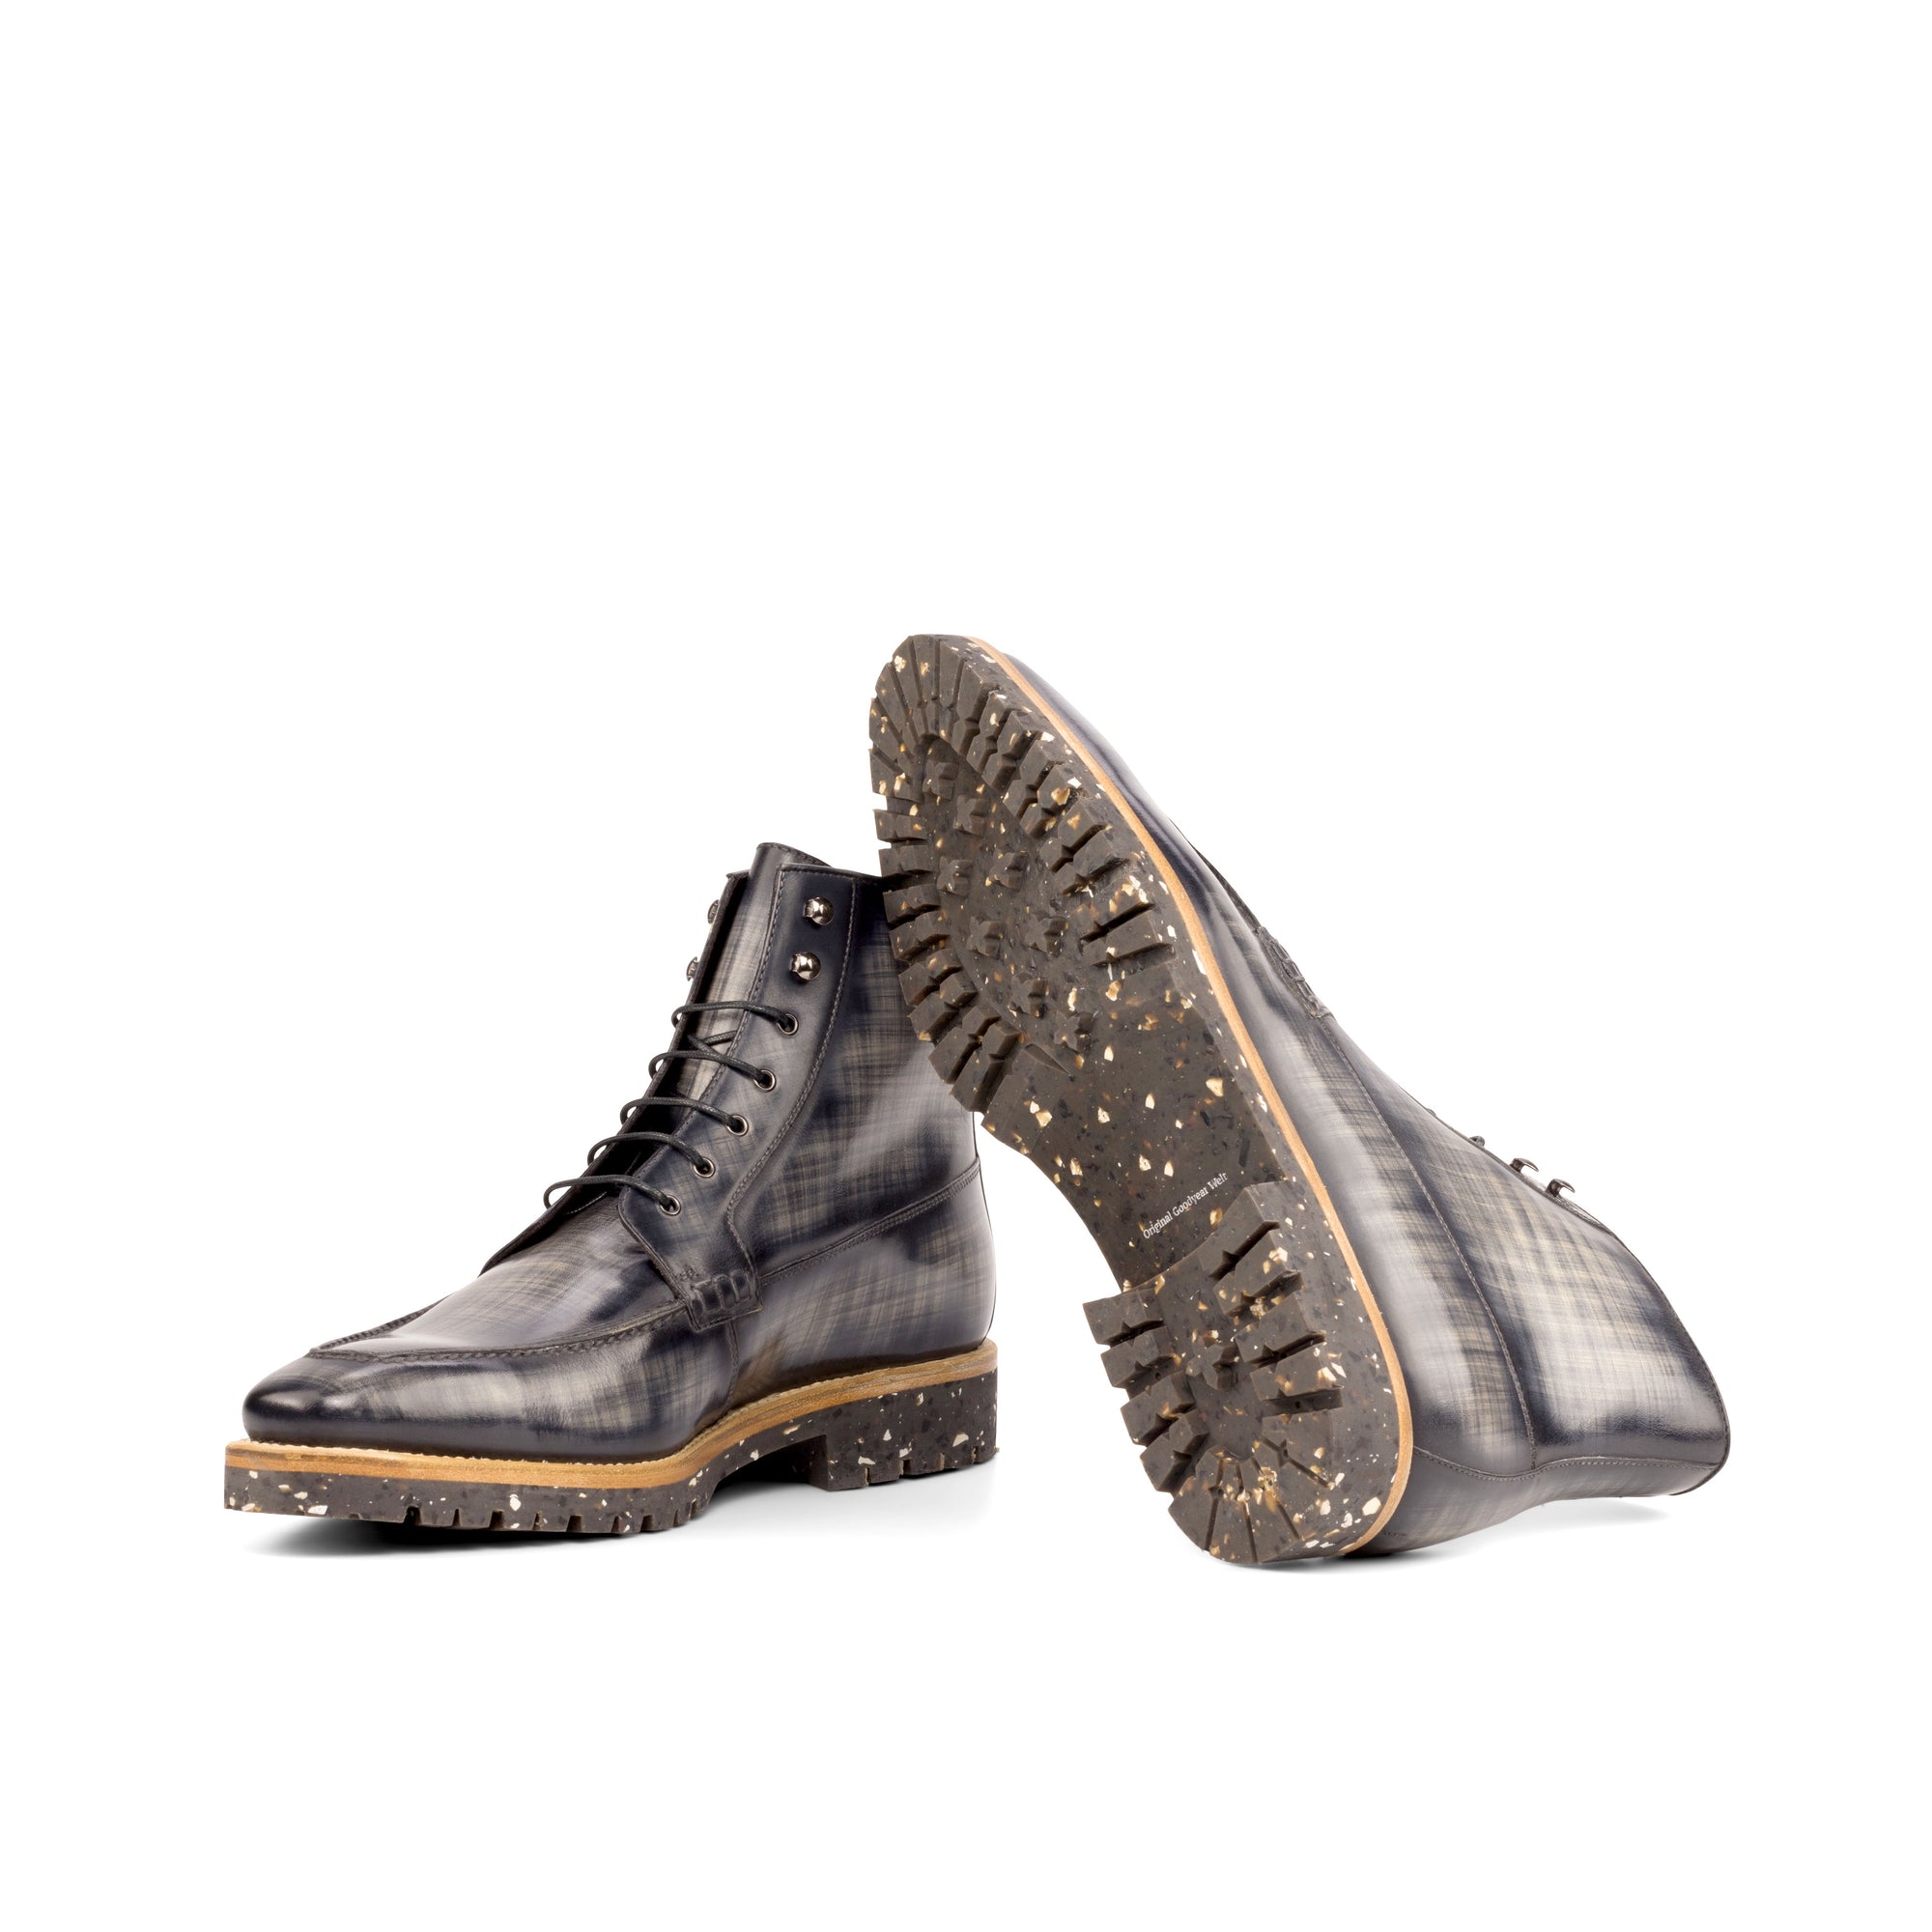 Bespoke Moc Patina Boots, Luxury Men's shoes